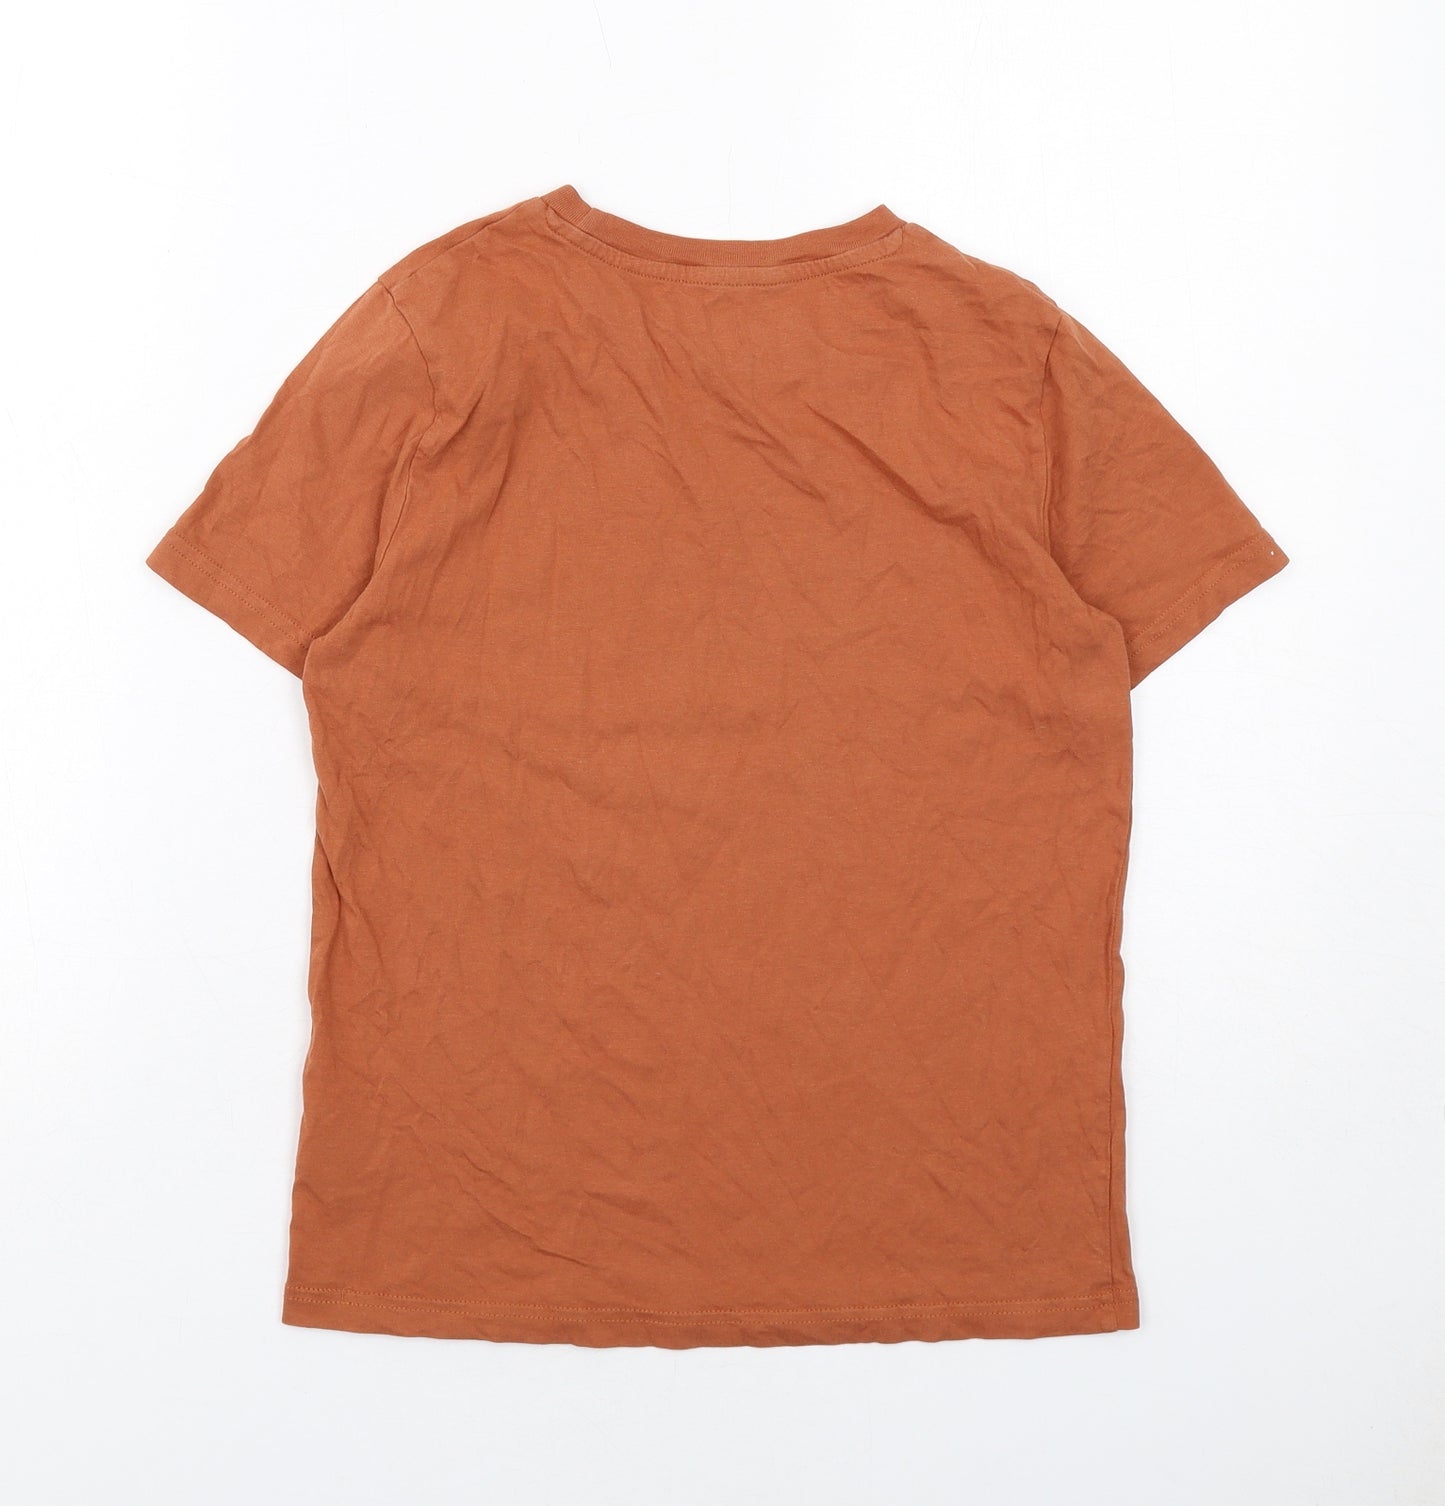 H&M Boys Orange Cotton Basic T-Shirt Size 10-11 Years Round Neck Pullover